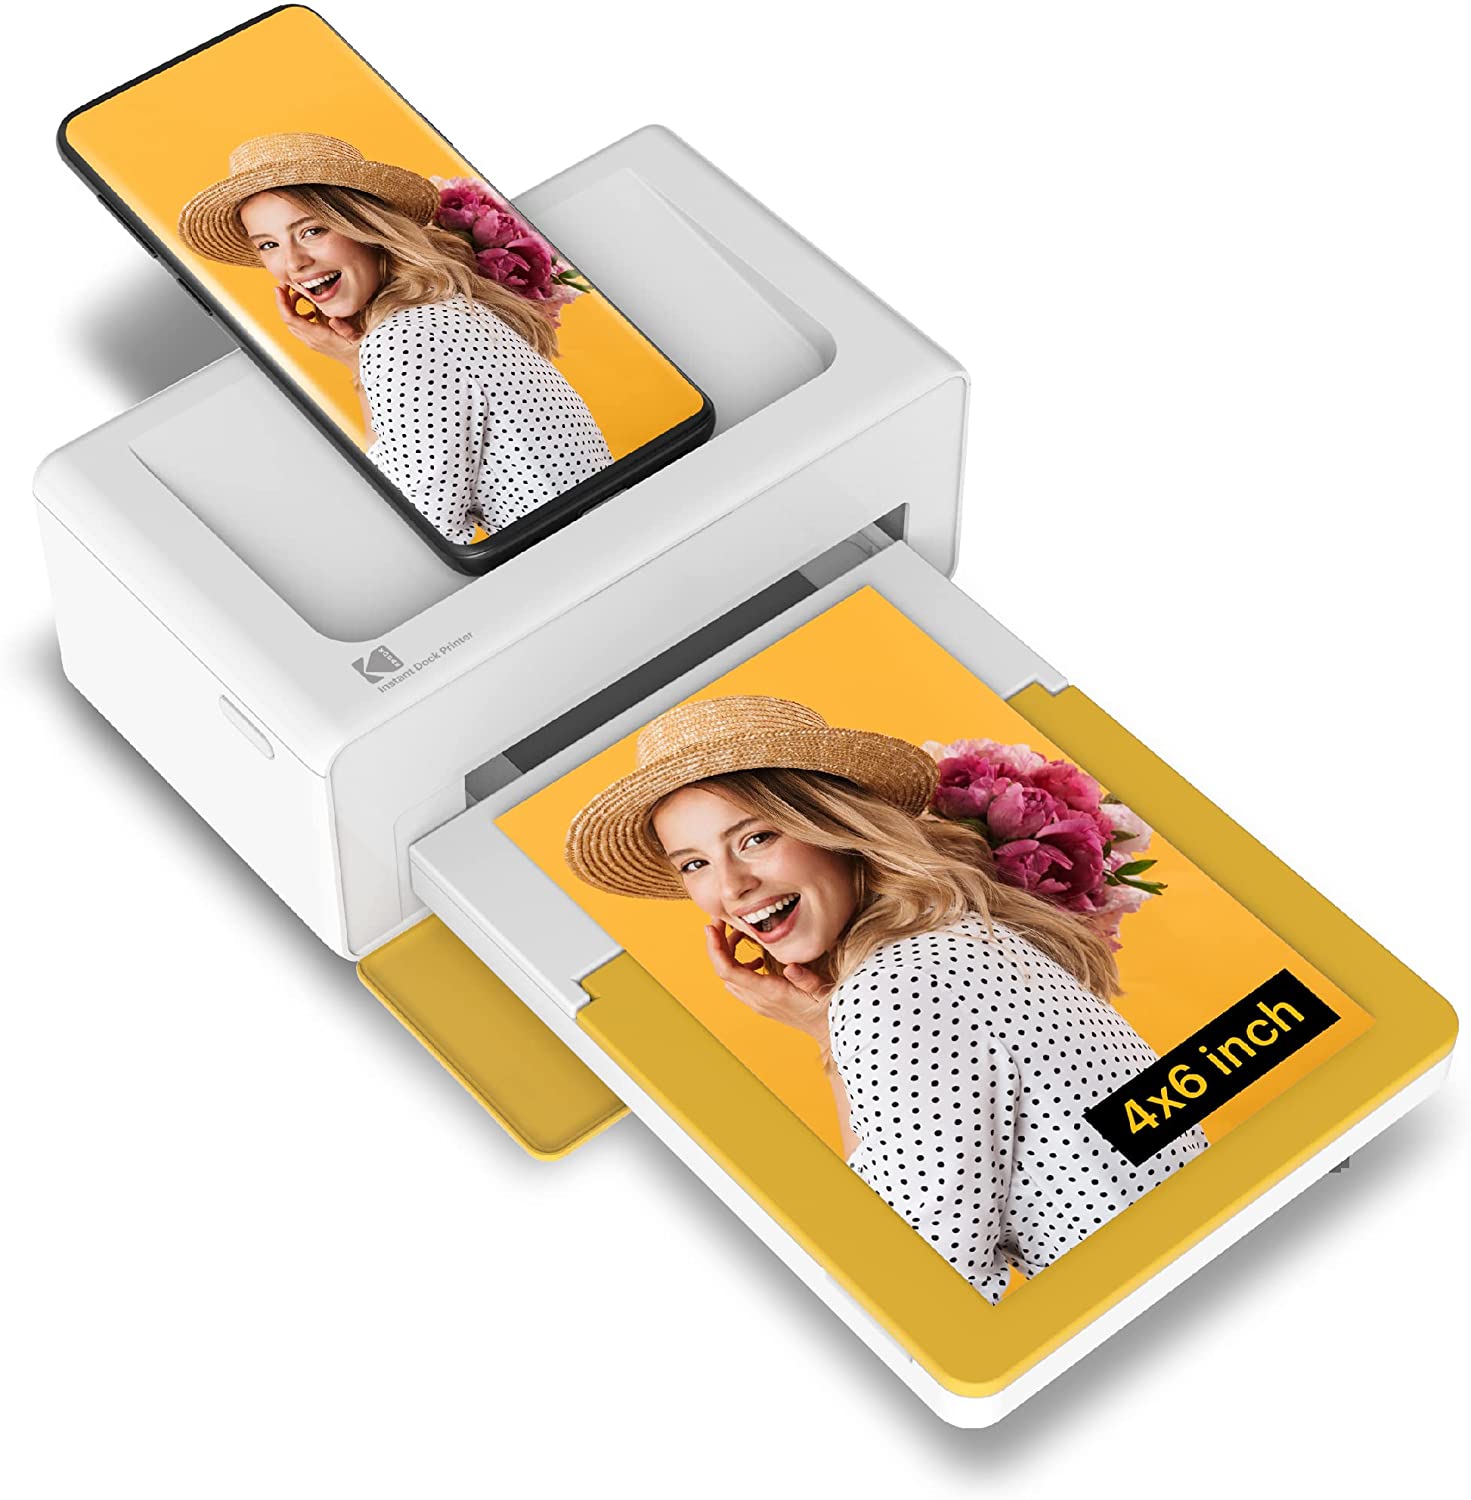 4x6 Portable Instant Photo Printer